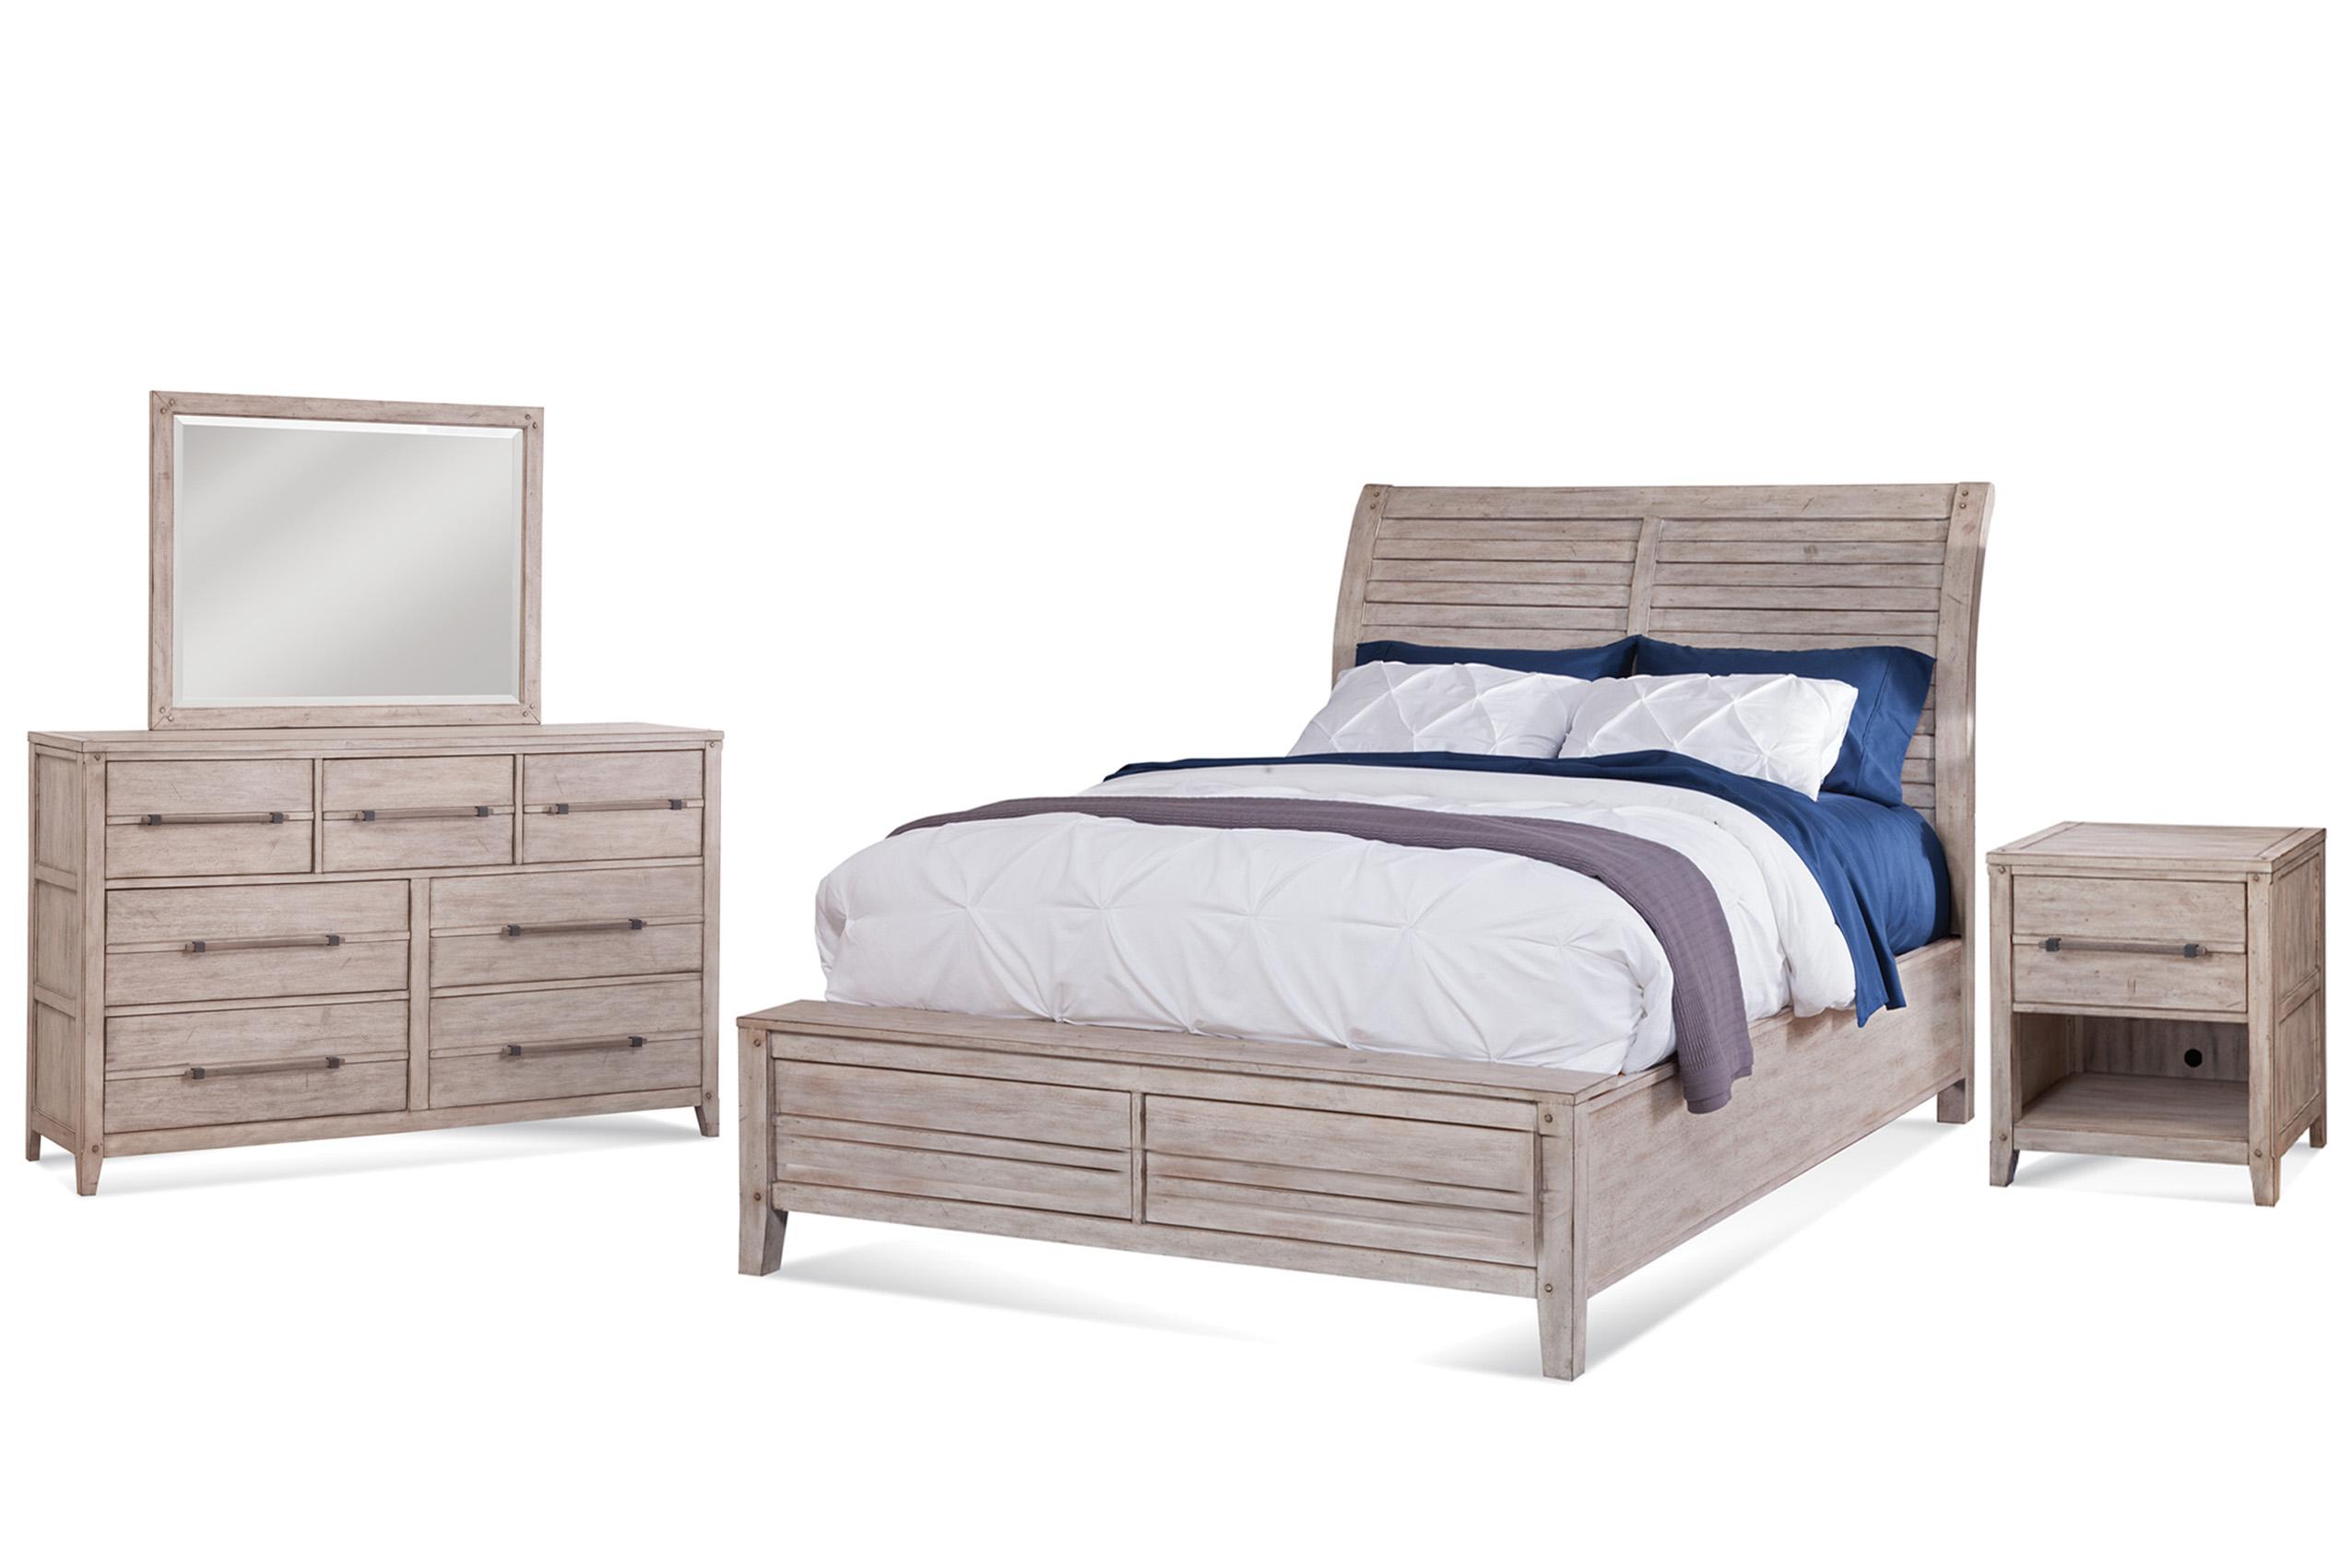 Classic, Traditional Sleigh Bedroom Set AURORA 2810-50SLP 2810-QSLPN-4PC in whitewash 